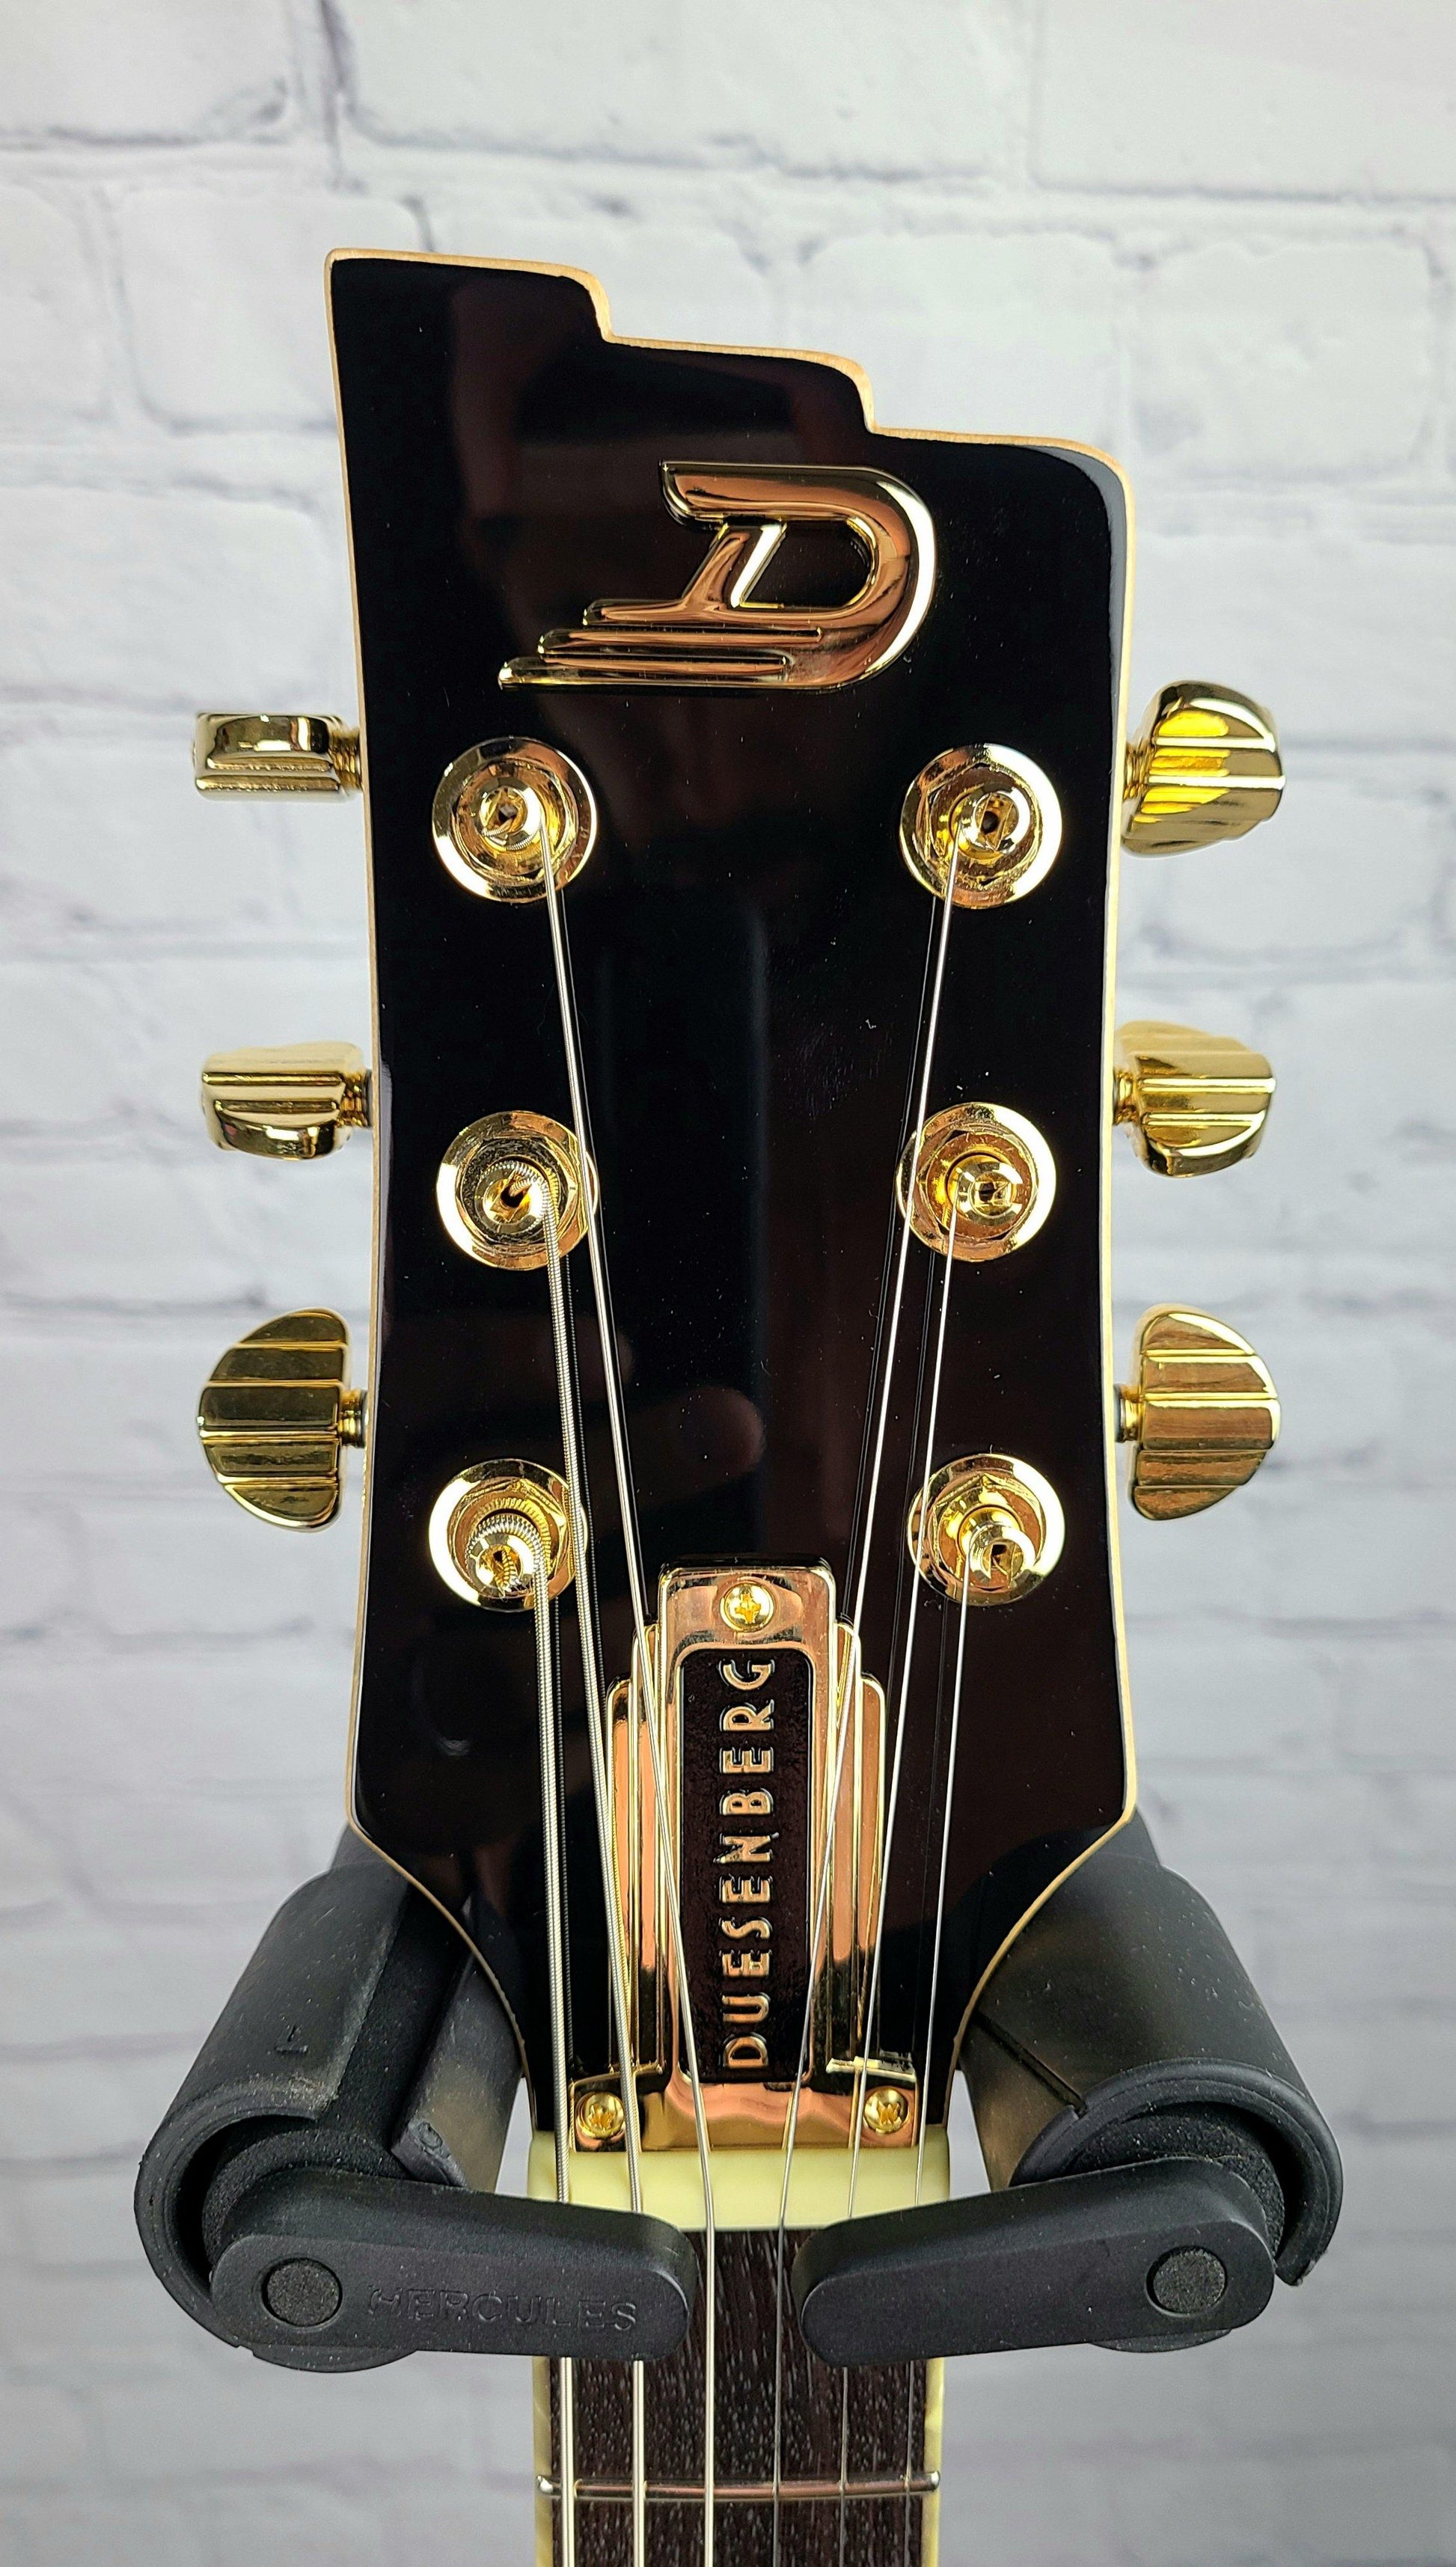 Duesenberg Guitars Starplayer TV Phonic Black Gold Electric Guitar DTV-PC-BK - Guitar Brando